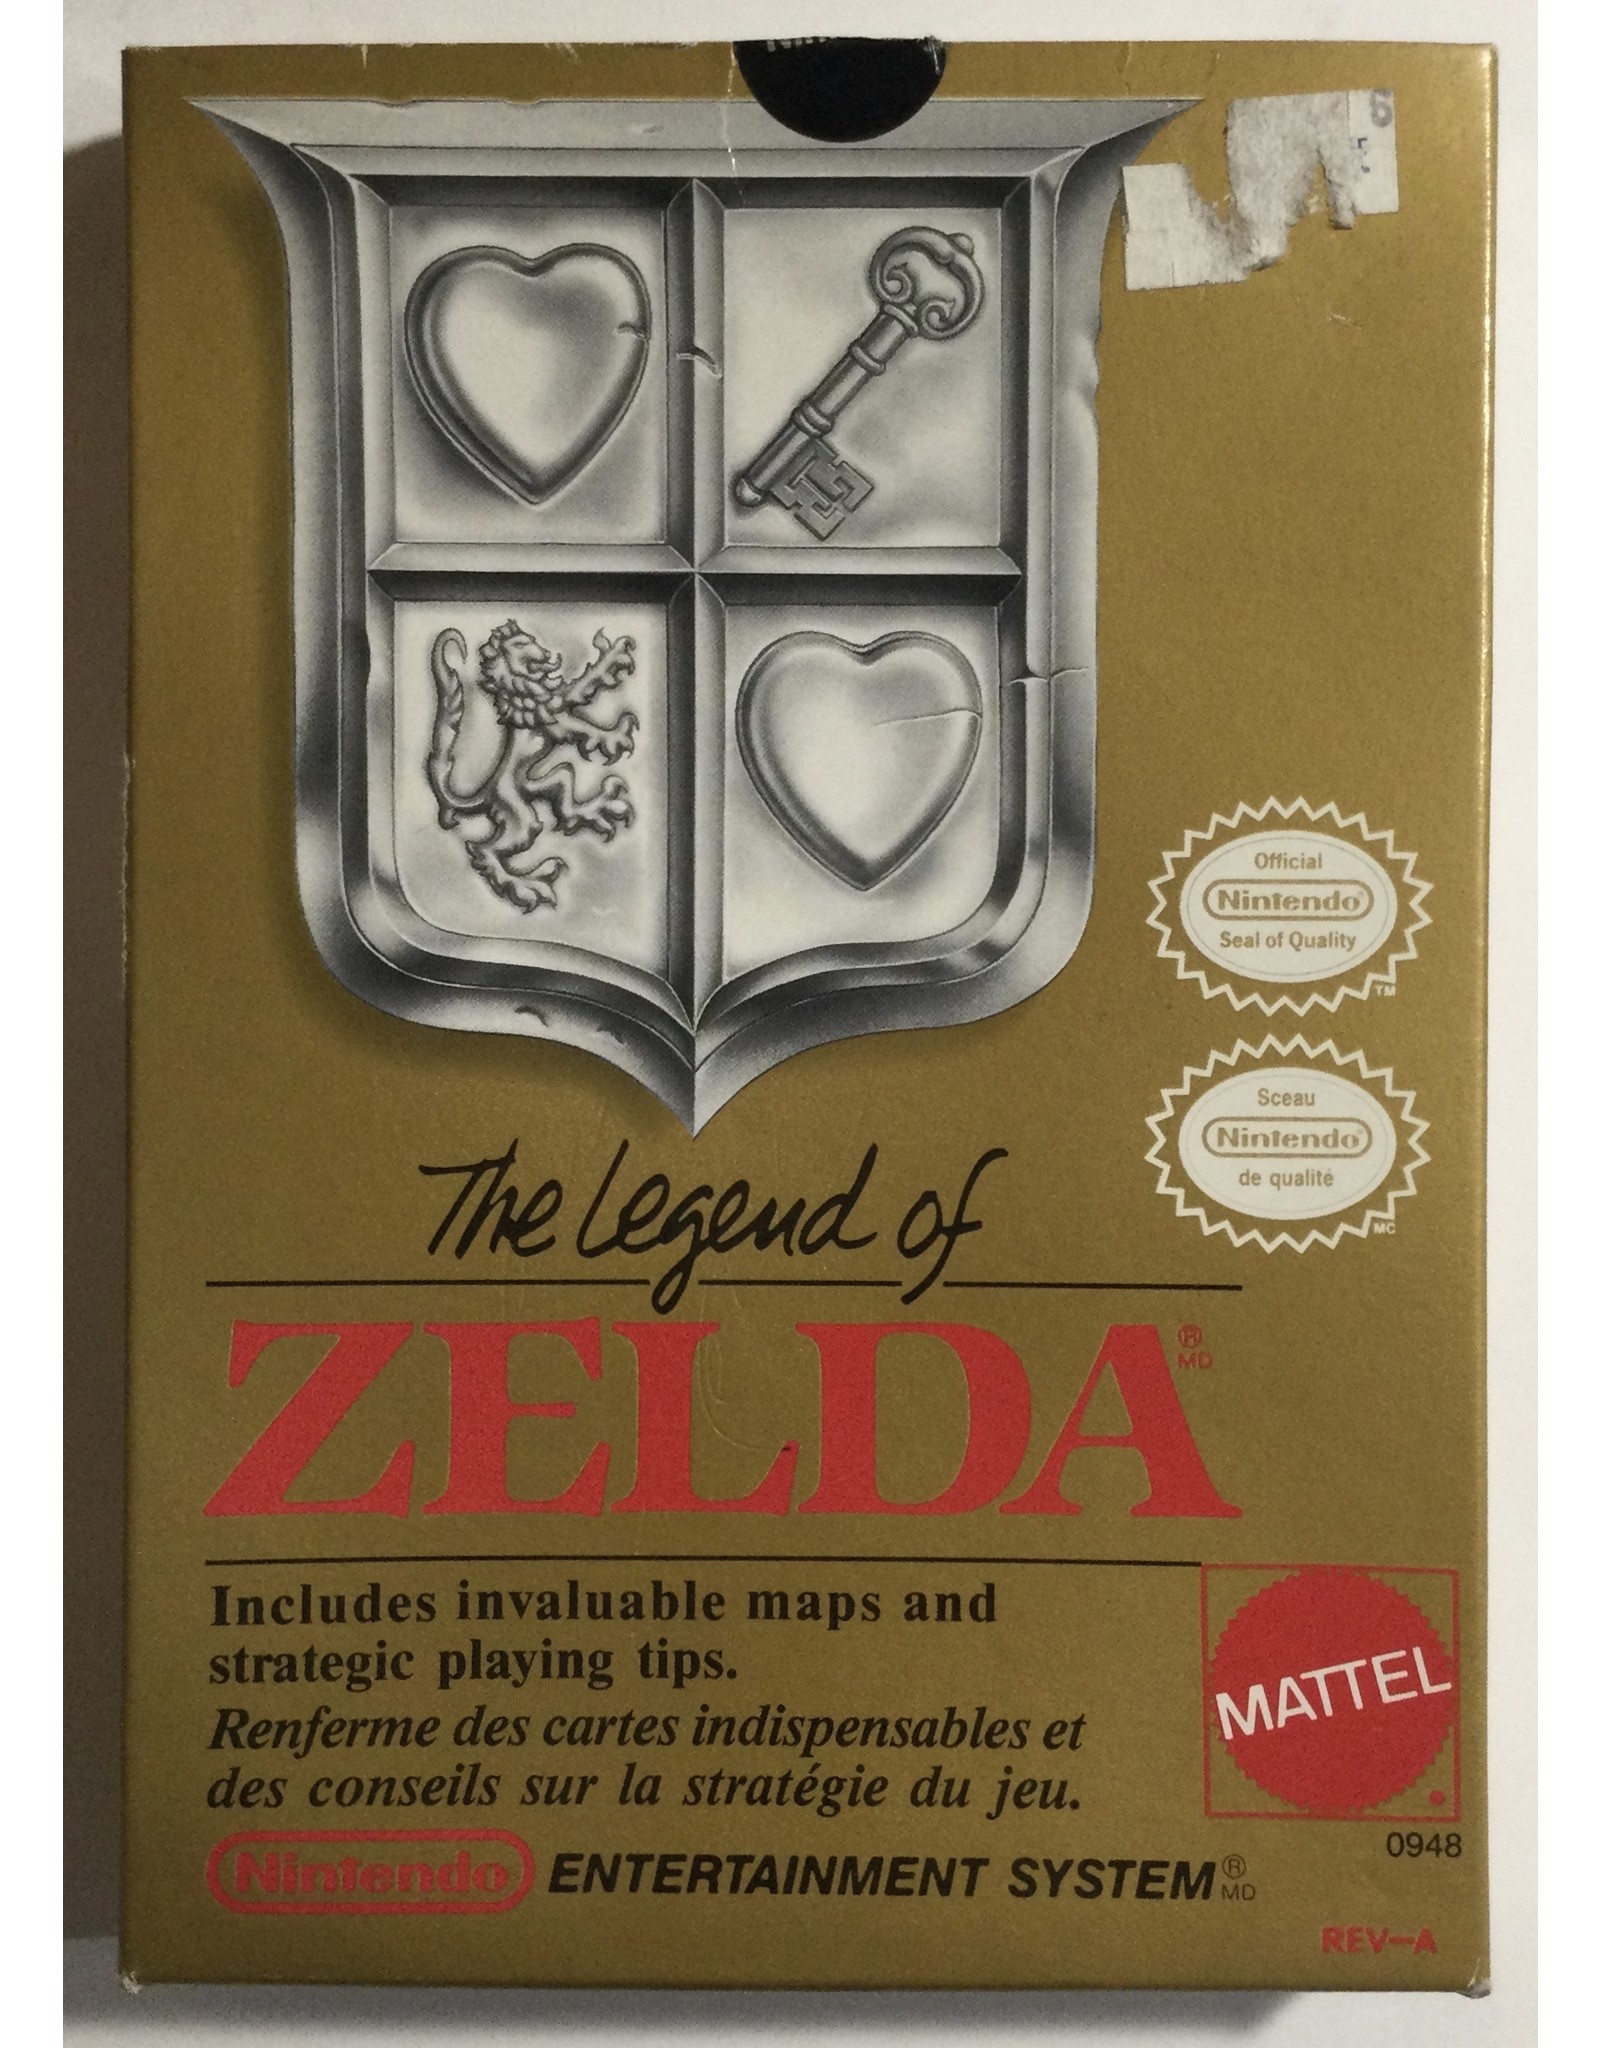 Mattel The Legend of Zelda for Nintendo Entertainment system (NES)